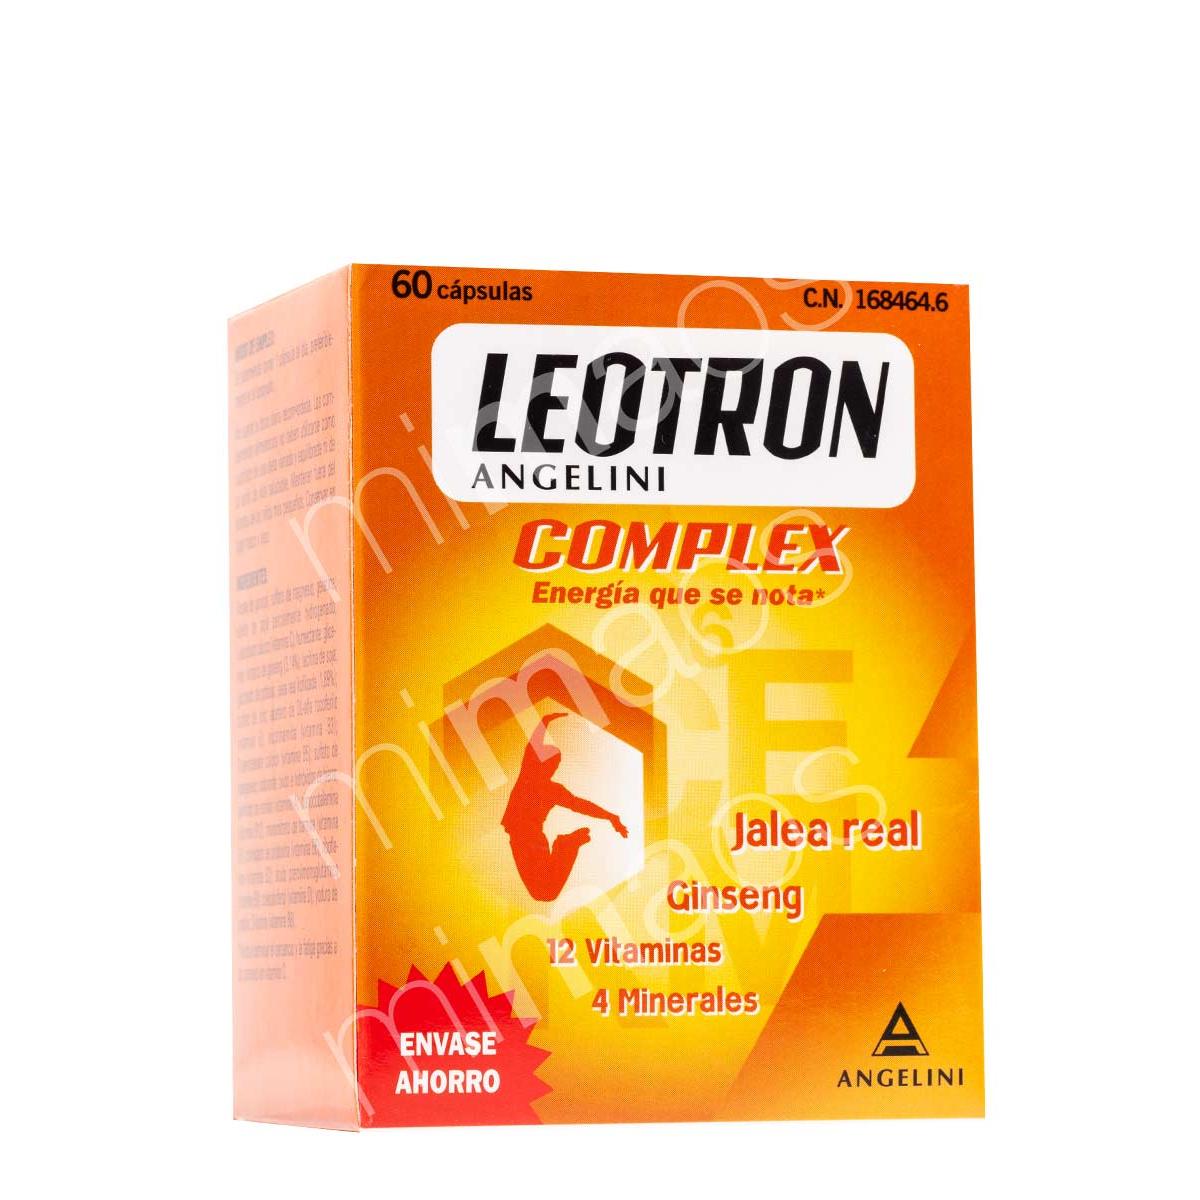 Leotron - Leotron complex angelini 60 cápsulas